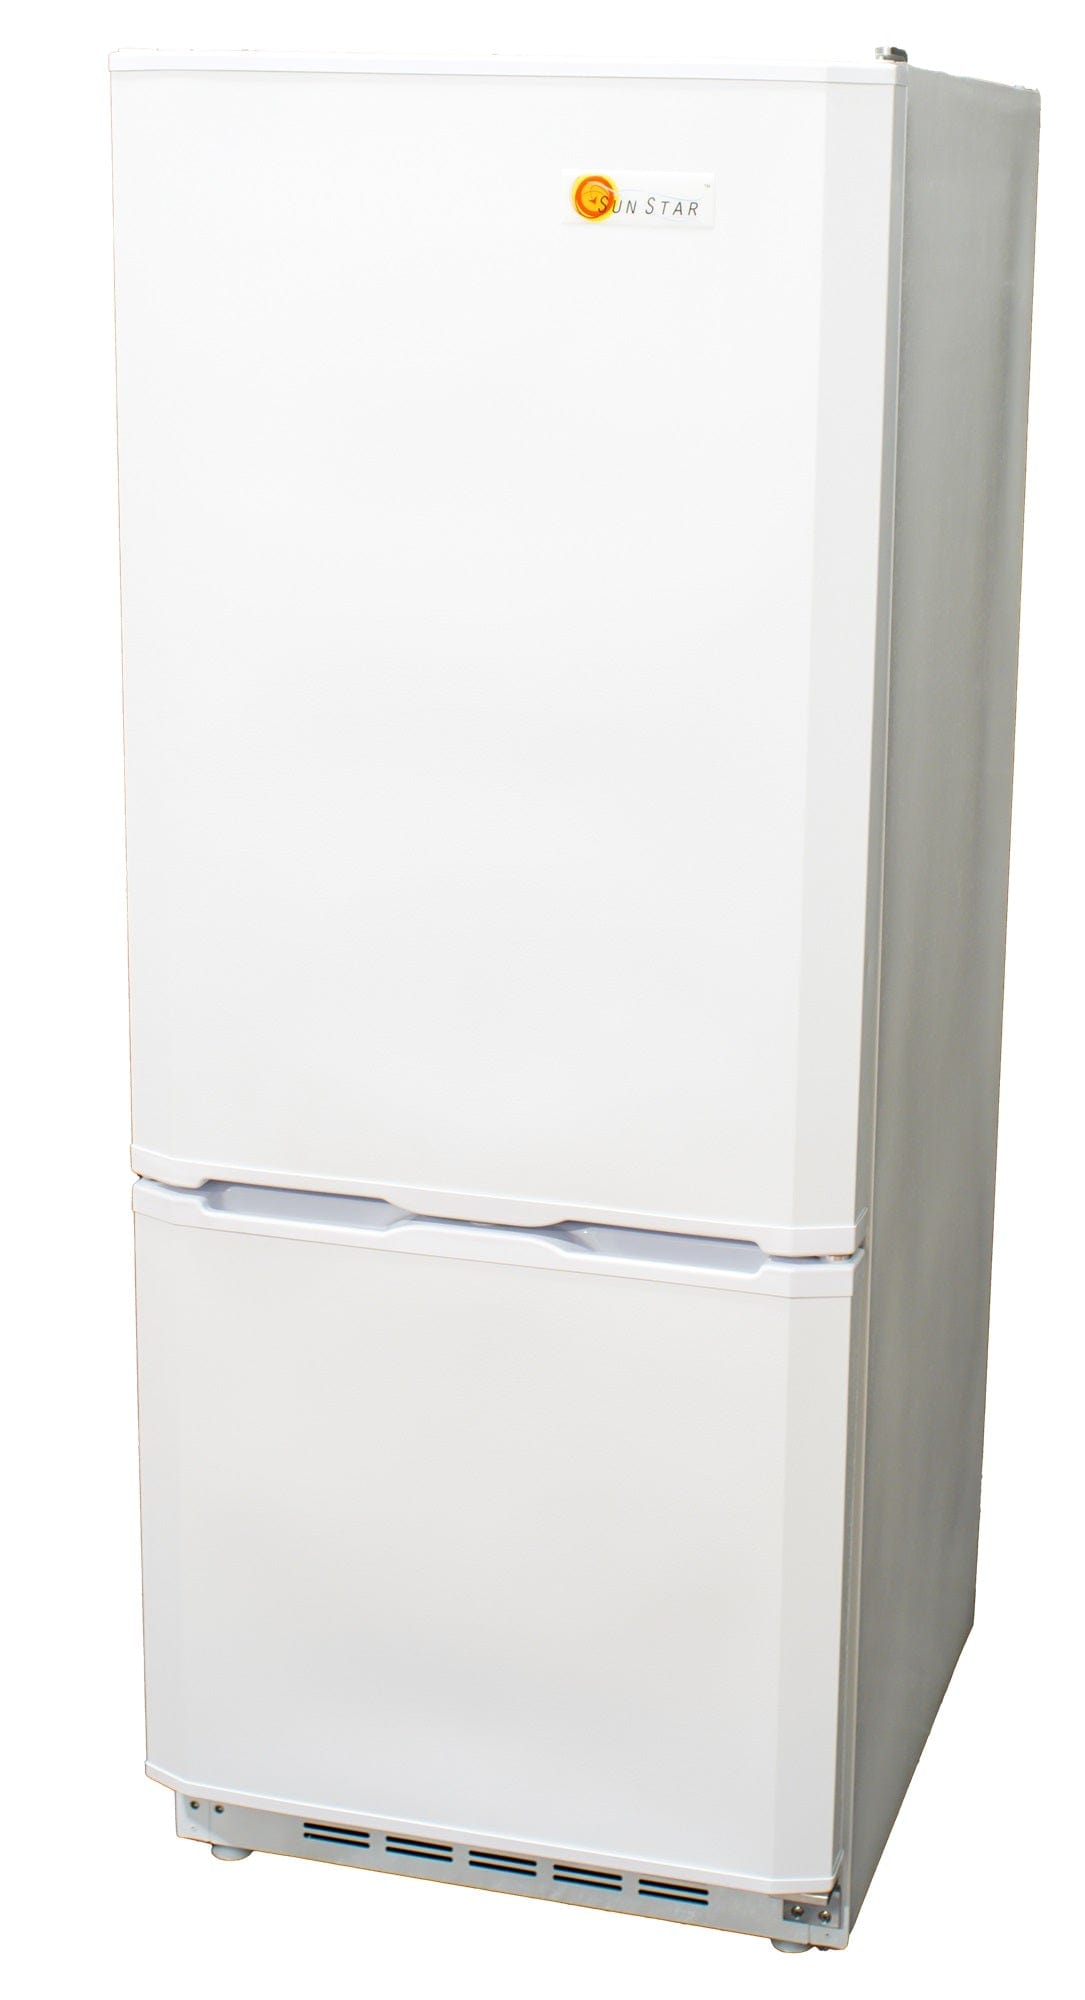 SunStar/SolarFreeze Solar Appliances Sunstar ST-10RF Solar (DC) and Grid (AC) Powered 10 cu ft Refrigerator-Freezer in White